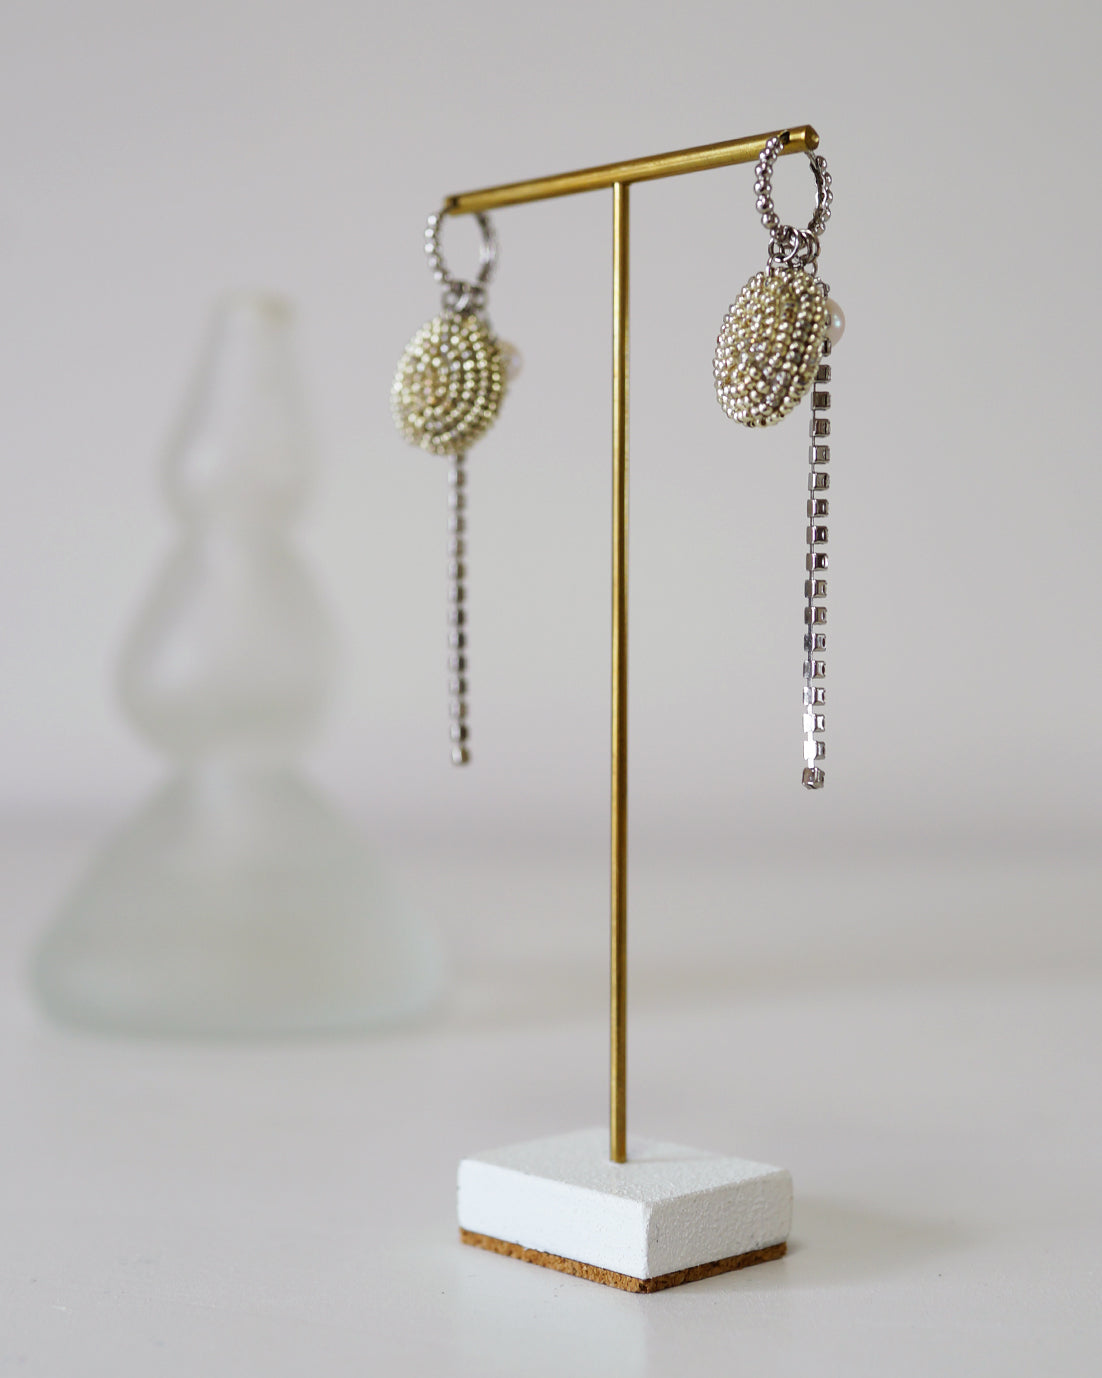 Beads seed-Silver+Pearl+Chain Earrings